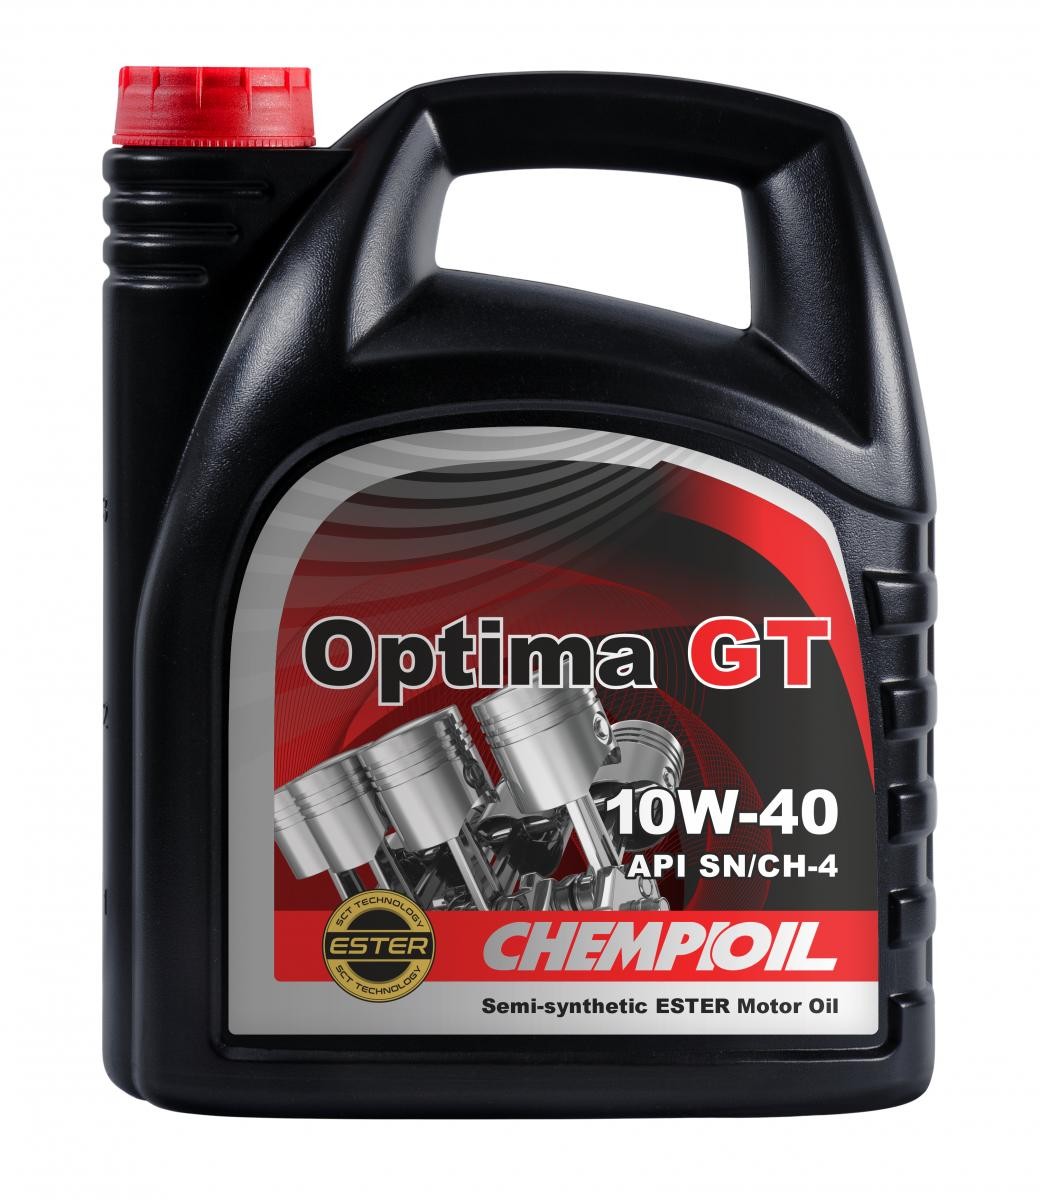 CHEMPIOIL Optima, GT CH9501-4 Moottoriöljy 10W-40, 4l, Osasynteettinen öljy